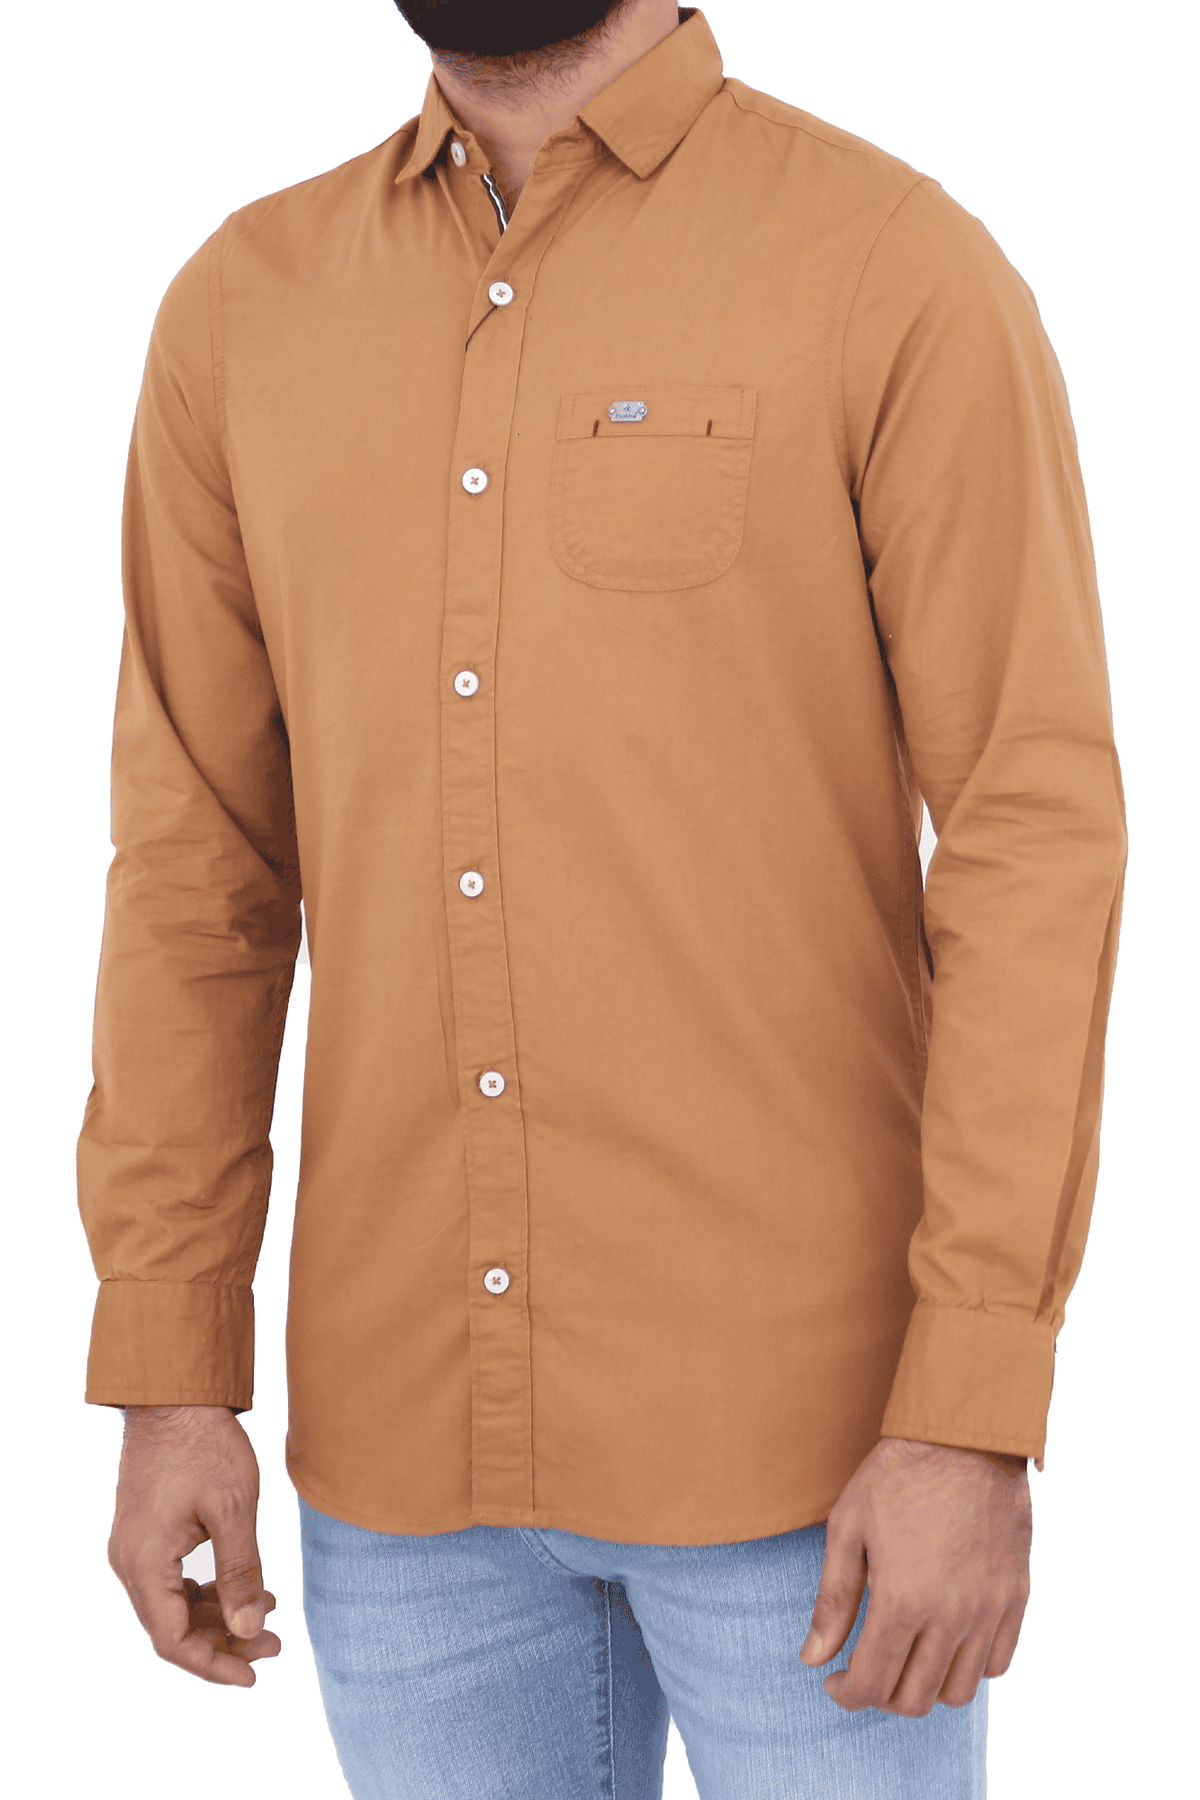 Men's Casual Shirt SHC-1726 Camel